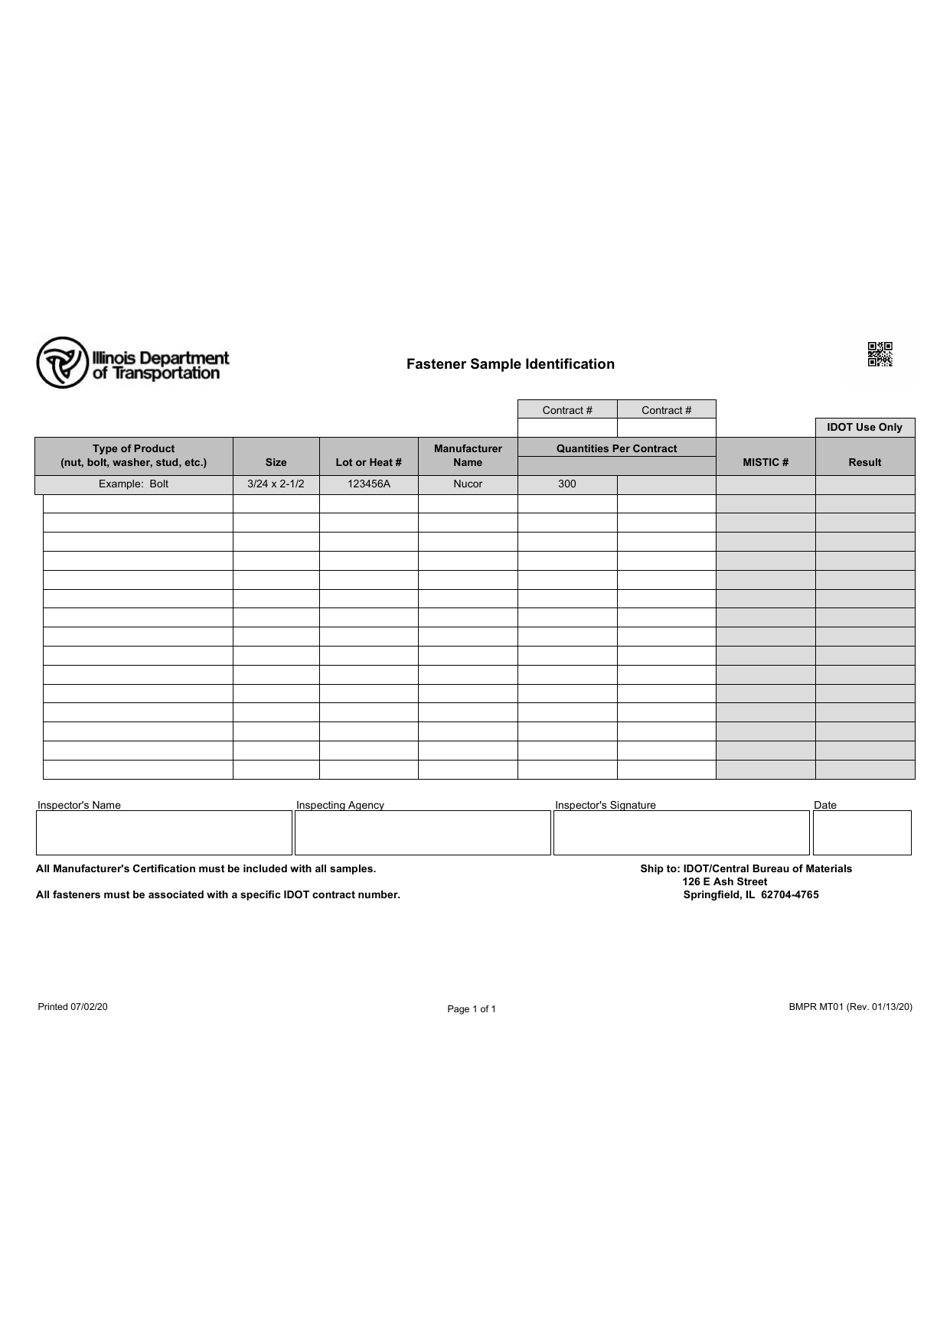 Form BMPR MT01 Fastener Sample Identification - Illinois, Page 1